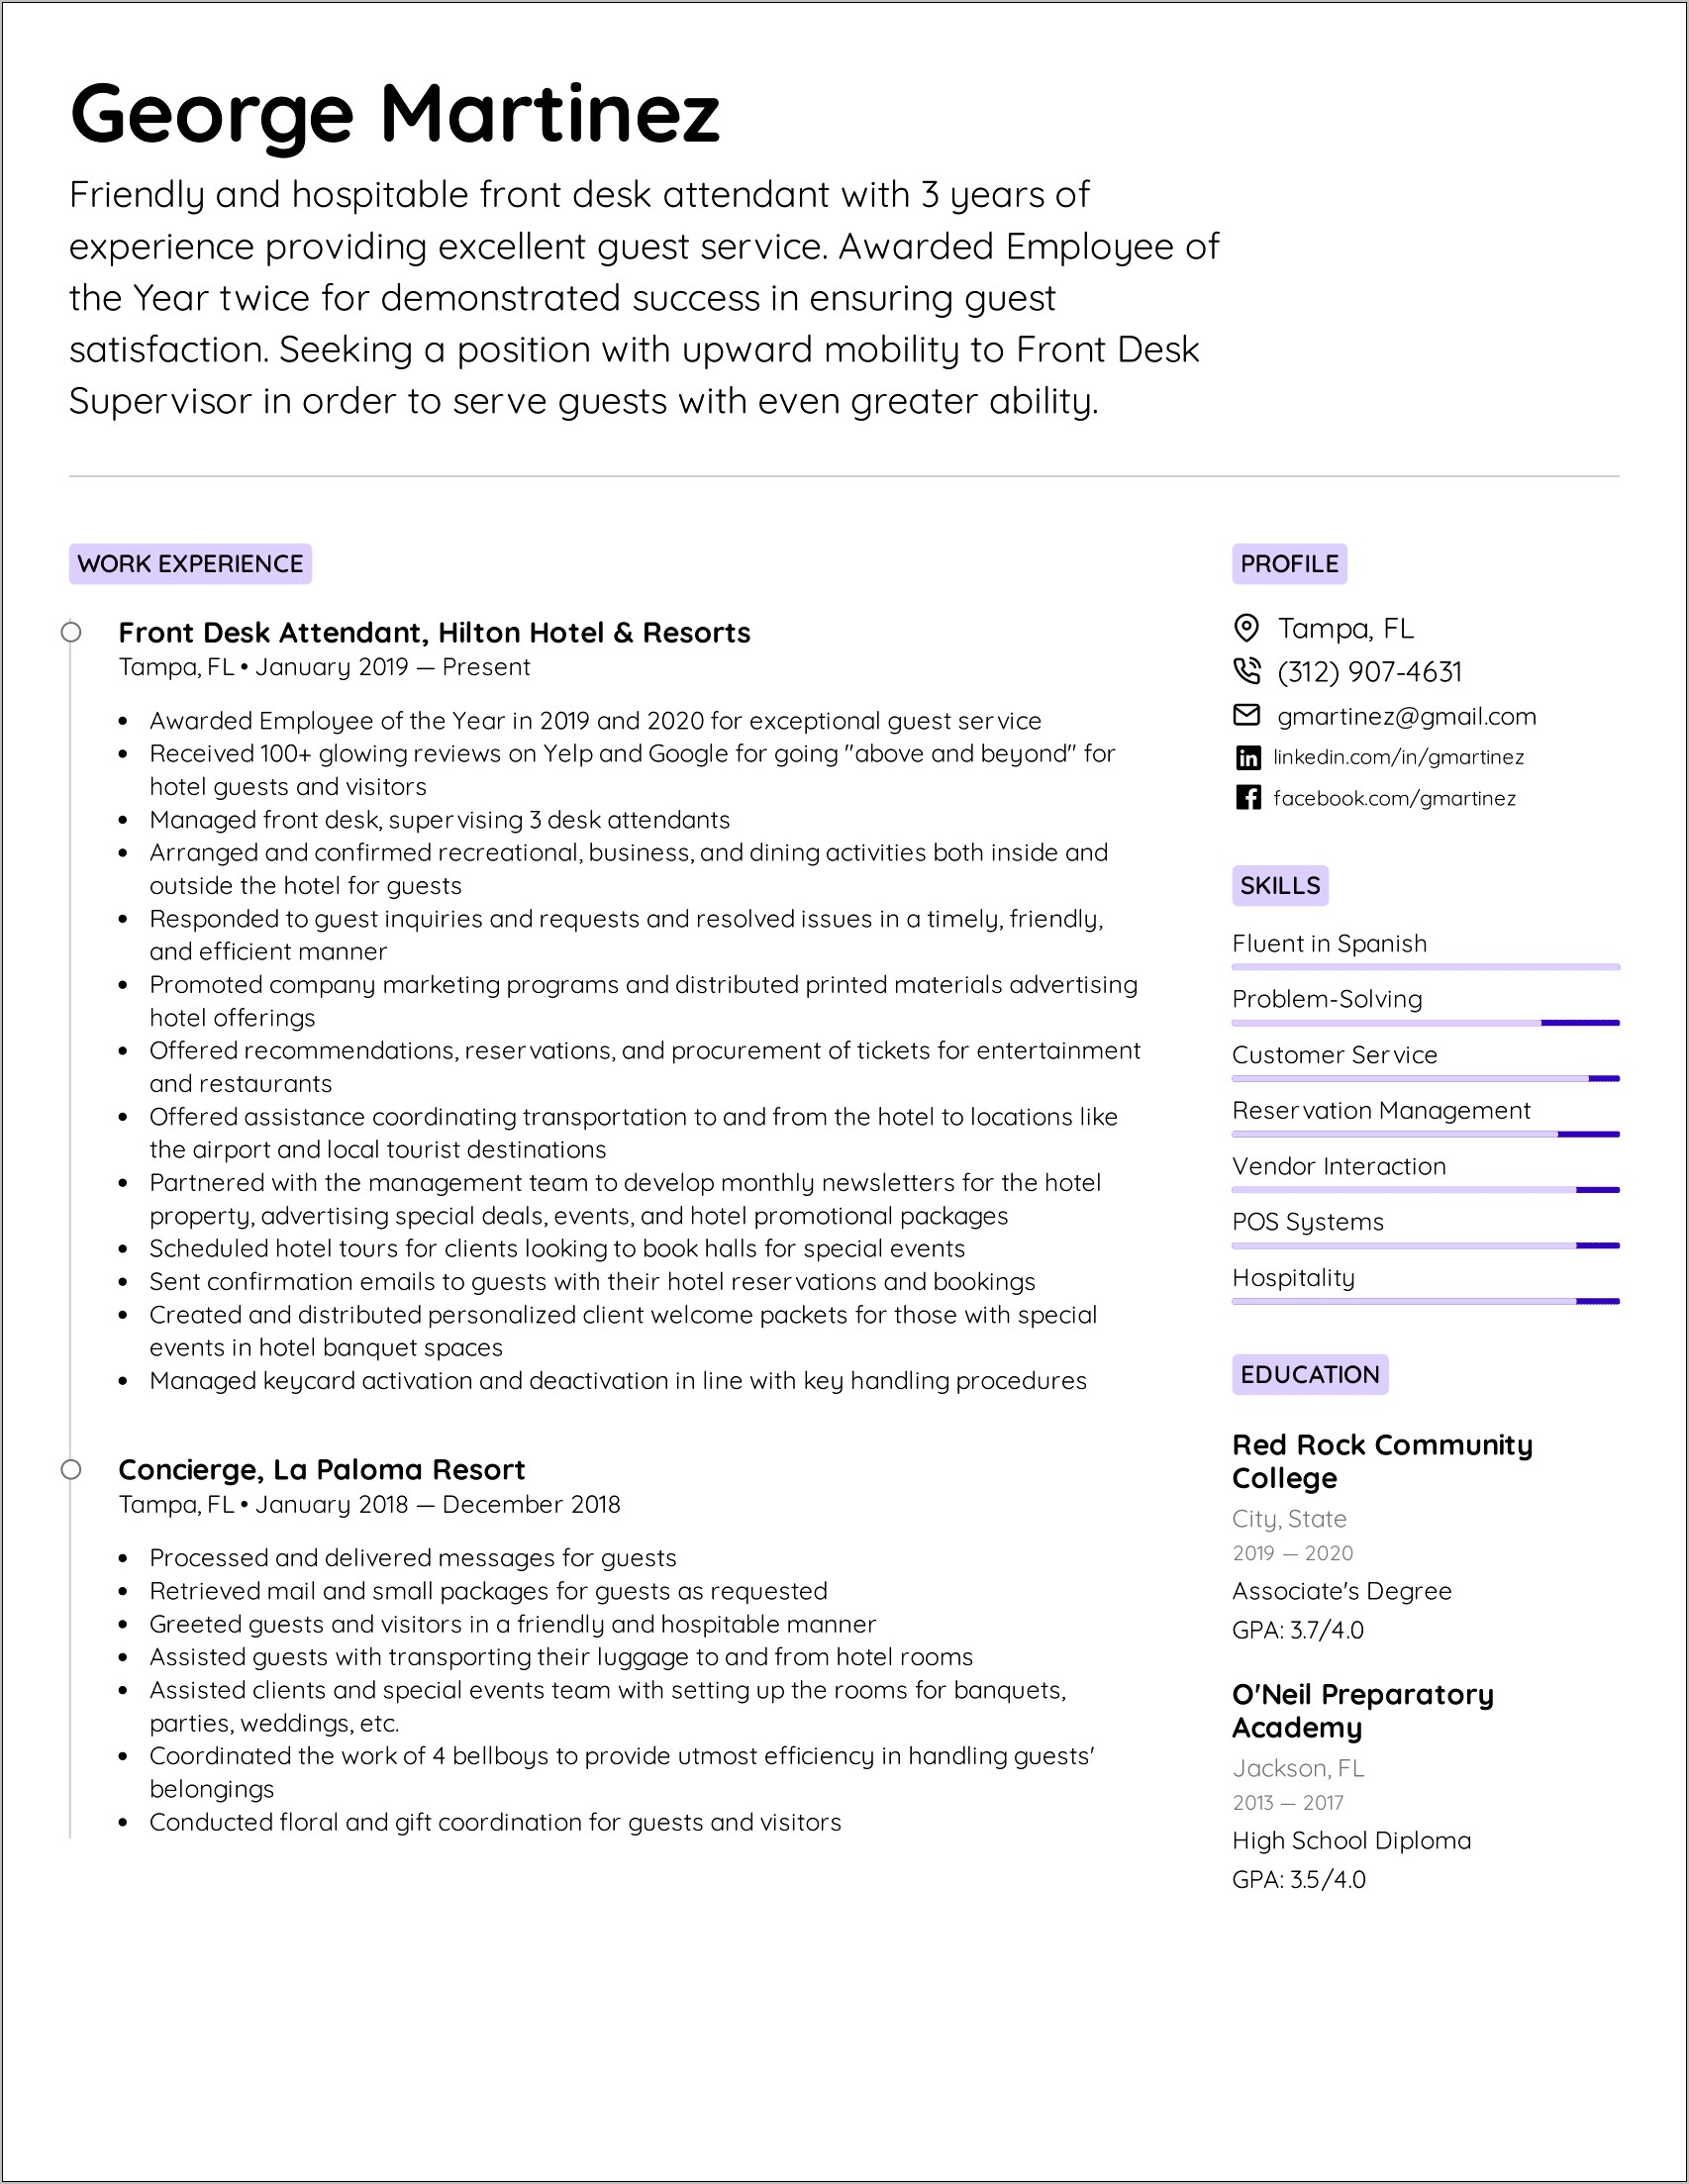 Concierge Job Description Resume Sample